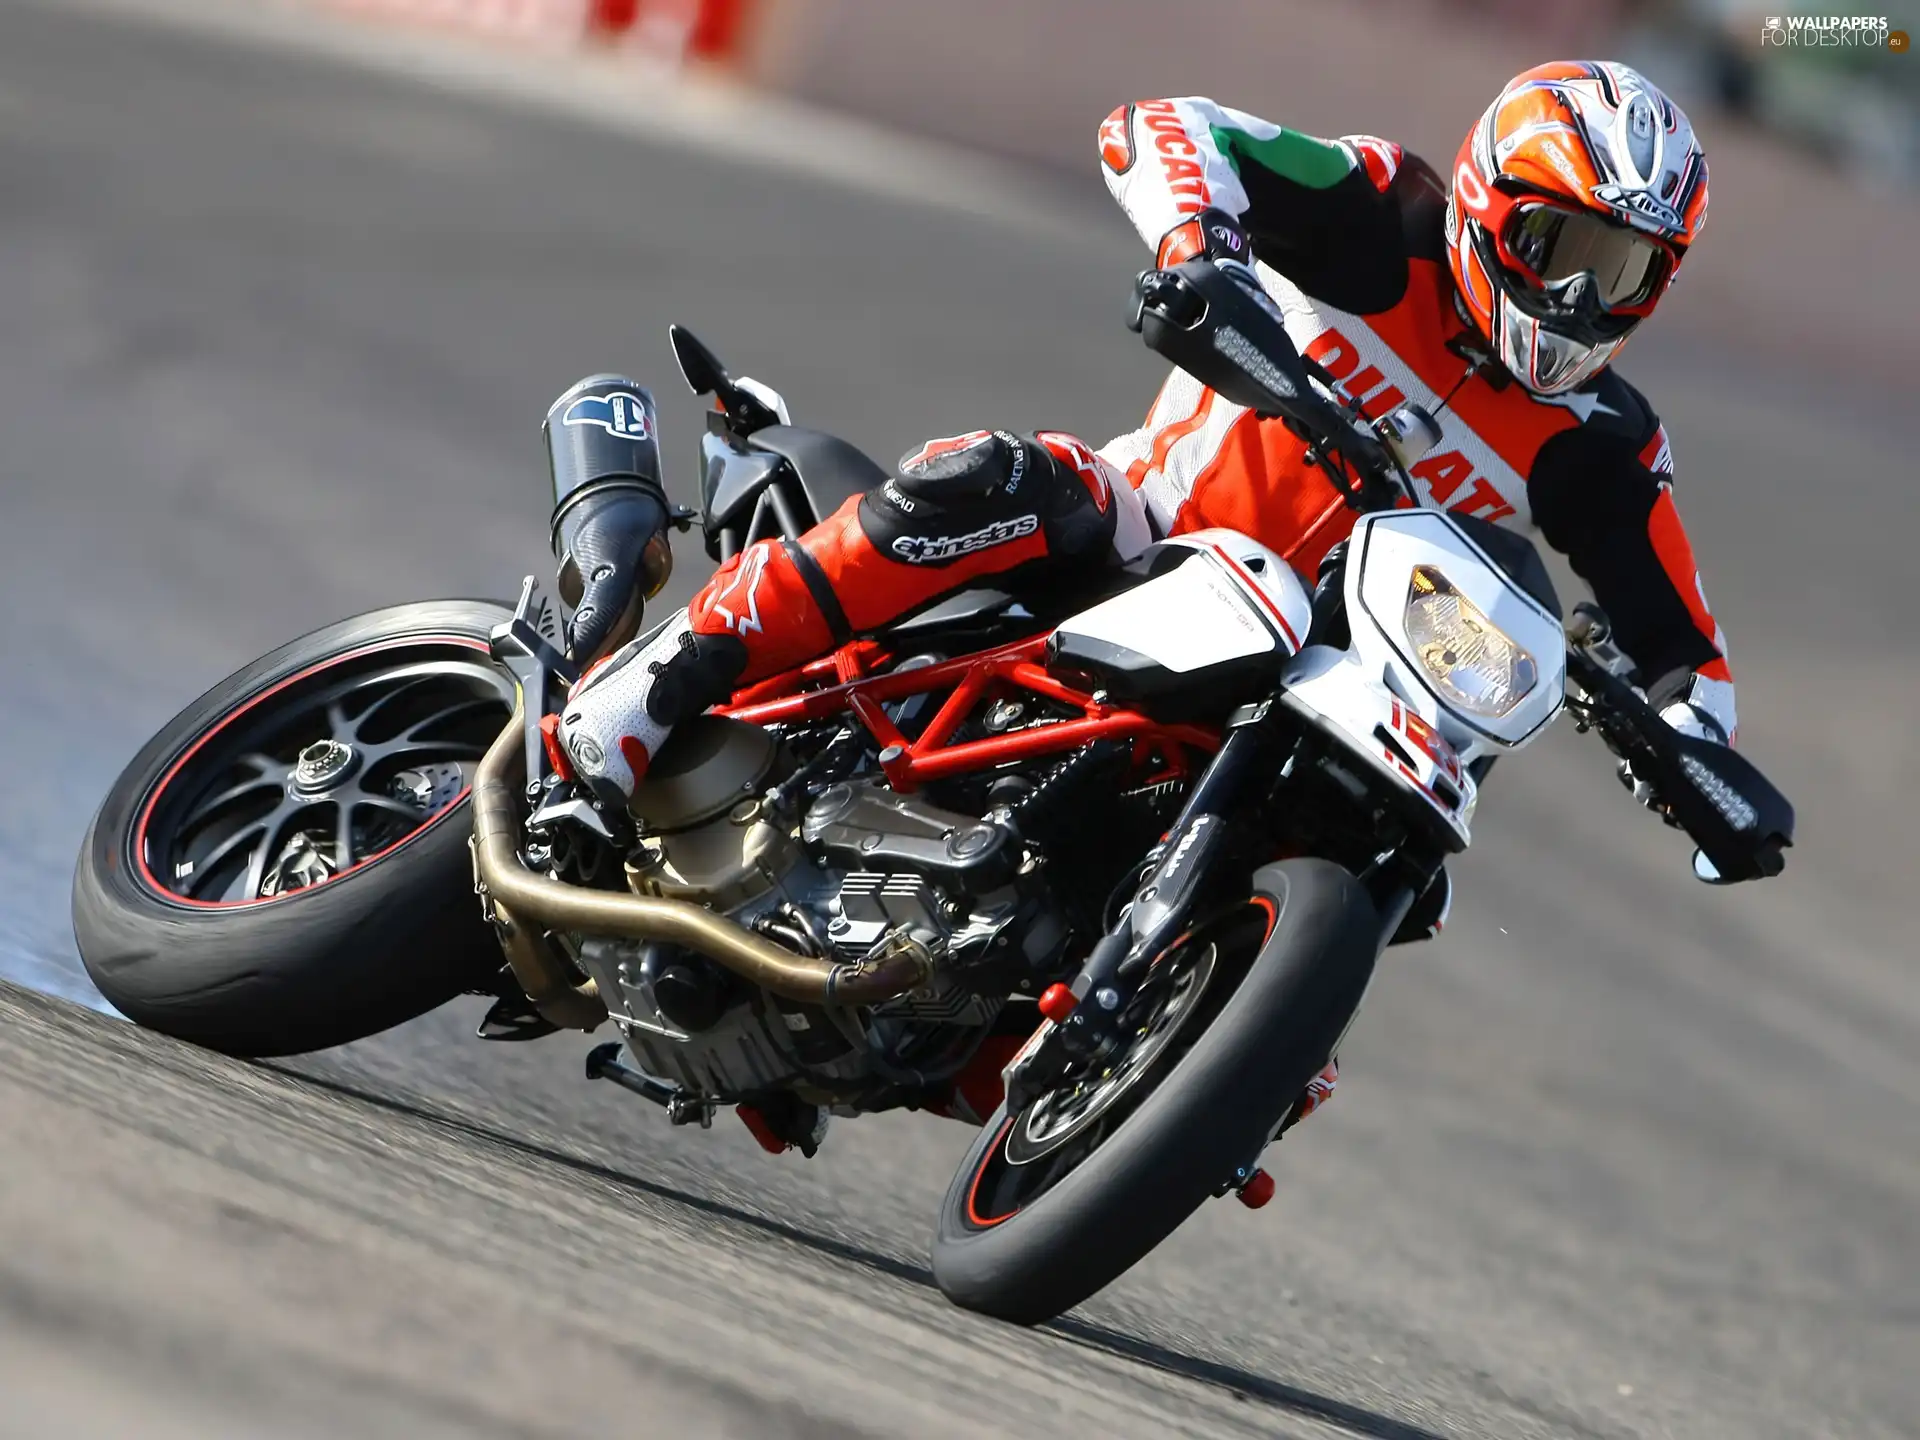 race, Ducati Hypermotard 1100 Evo, track